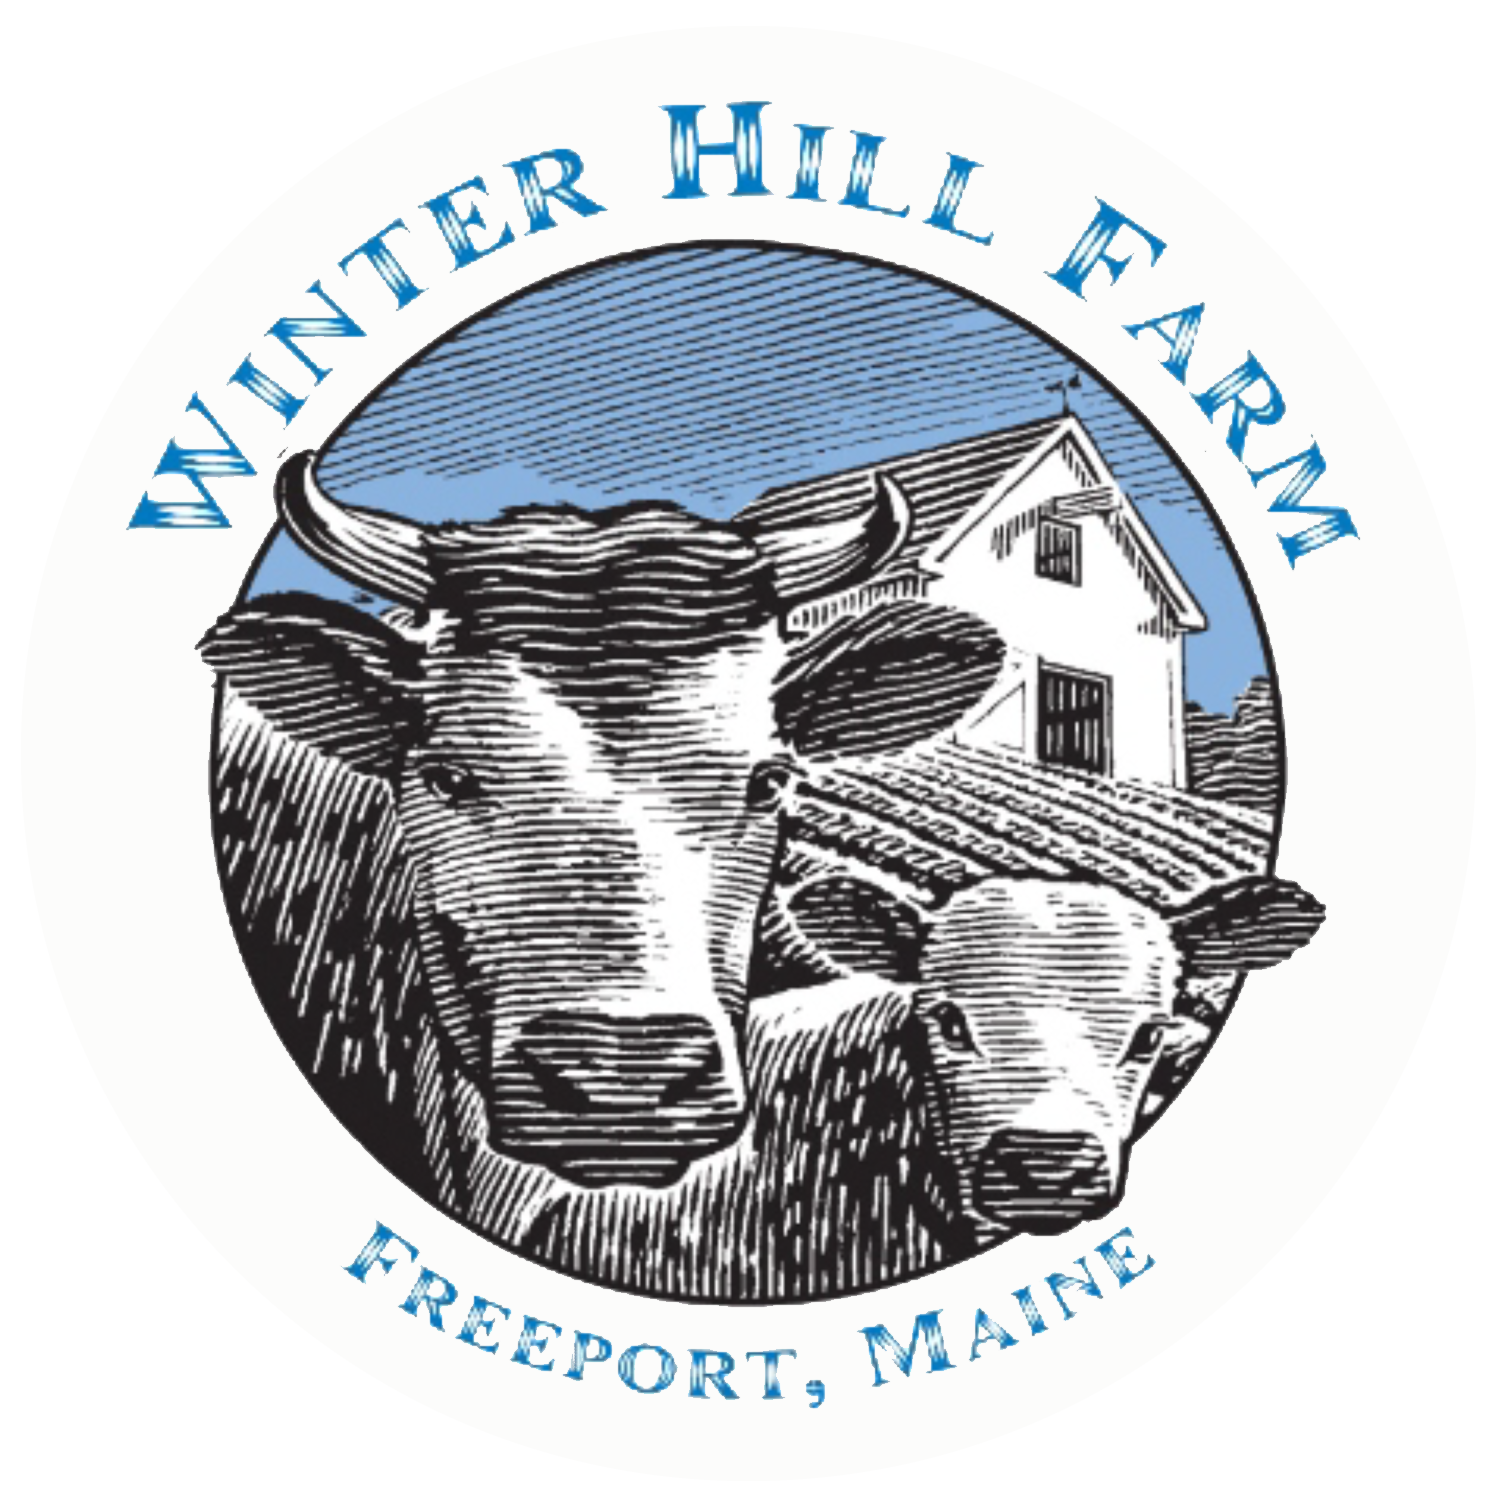 Winter Hill Farm